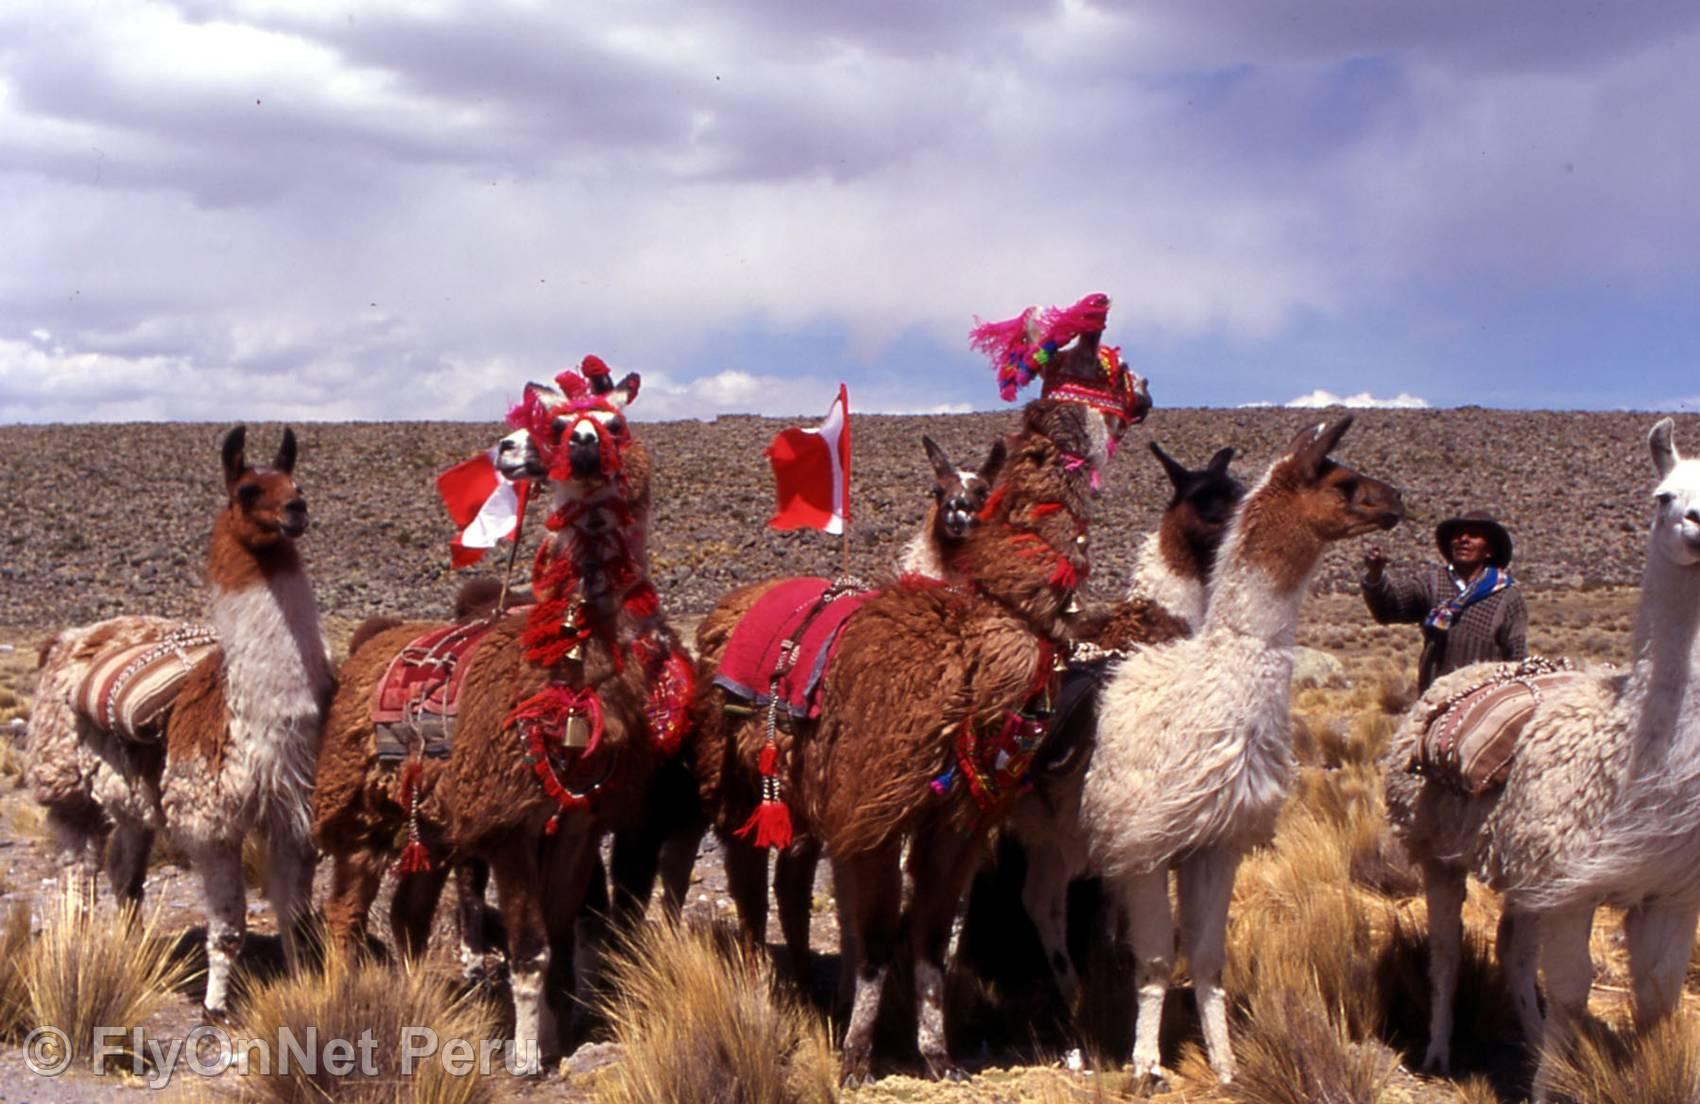 Photo Album: Llamas